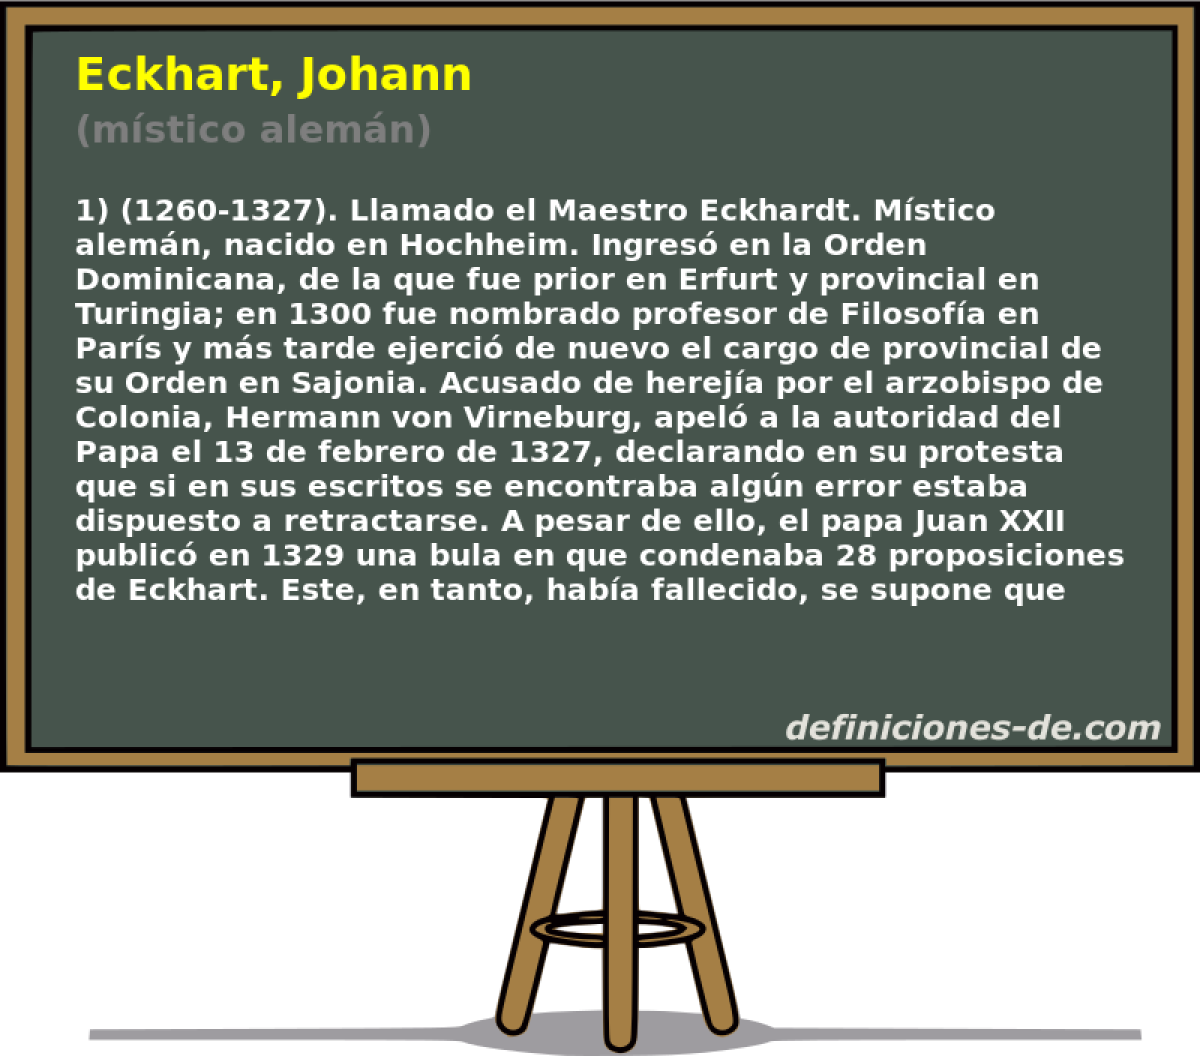 Eckhart, Johann (mstico alemn)